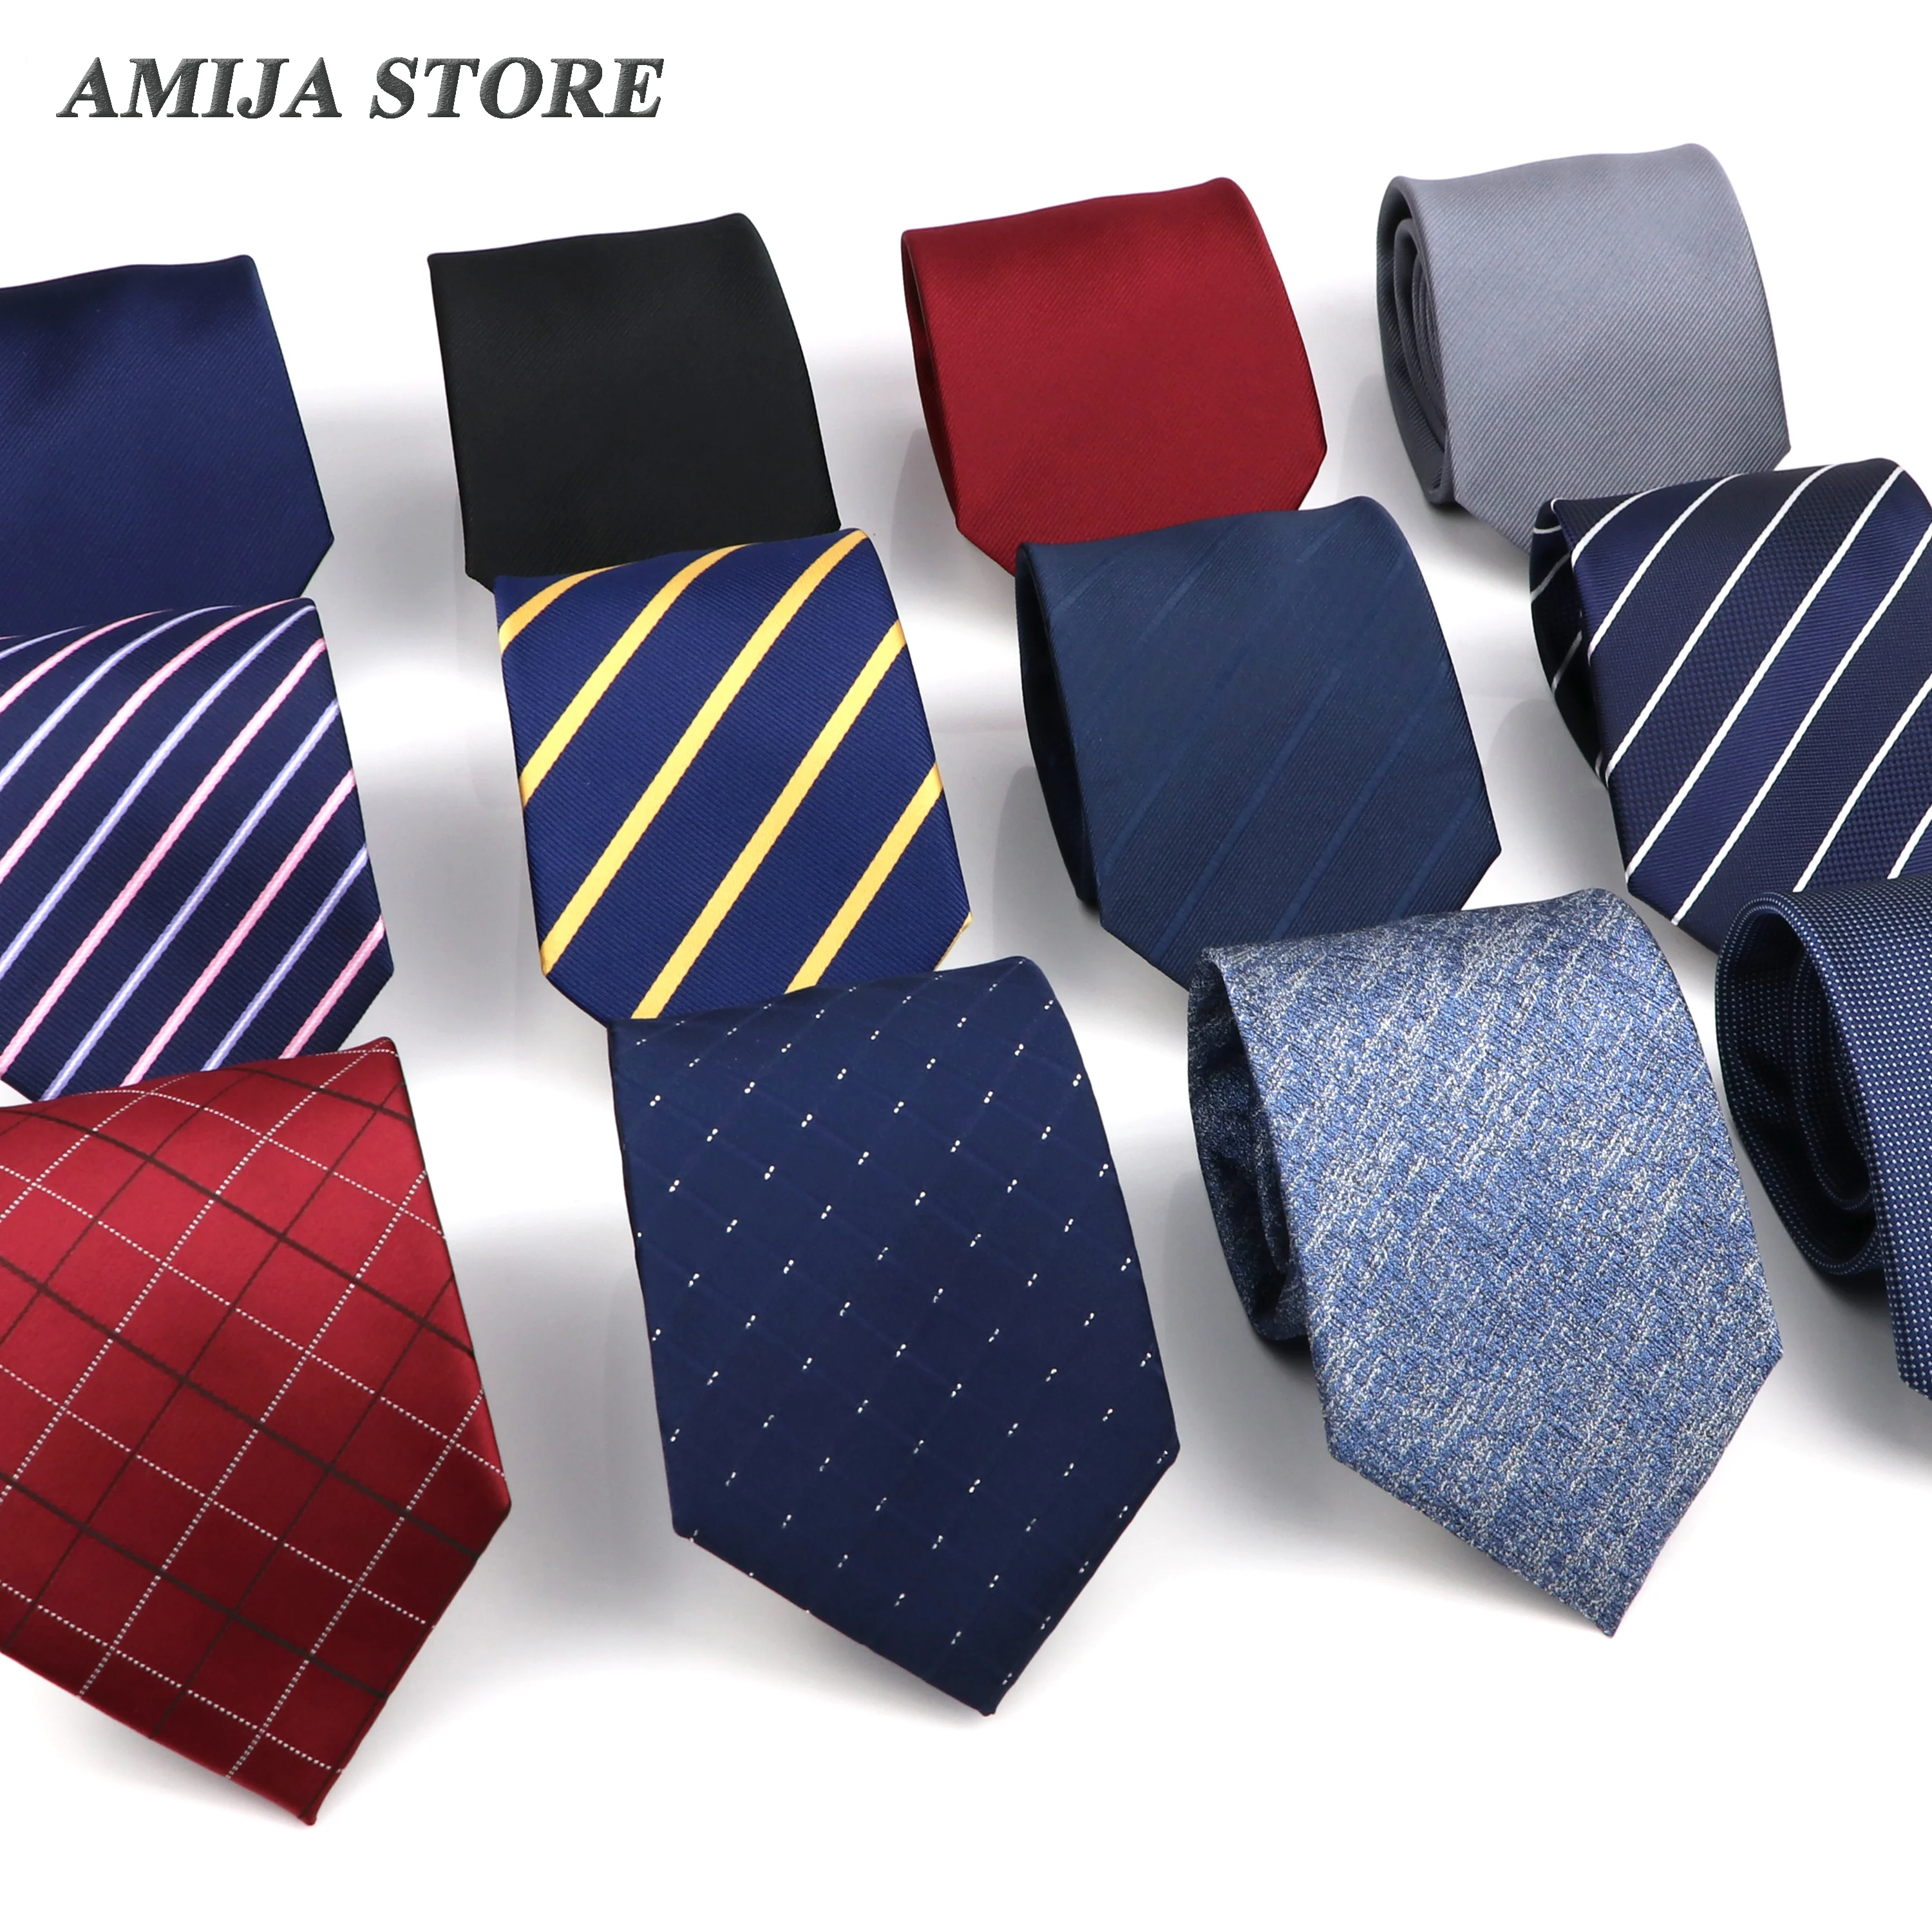 Blue Business Solid Classic Men's Tie Striped Necktie Formal Original Gift For Man Daily Wear Accessories Cravat Wedding Party